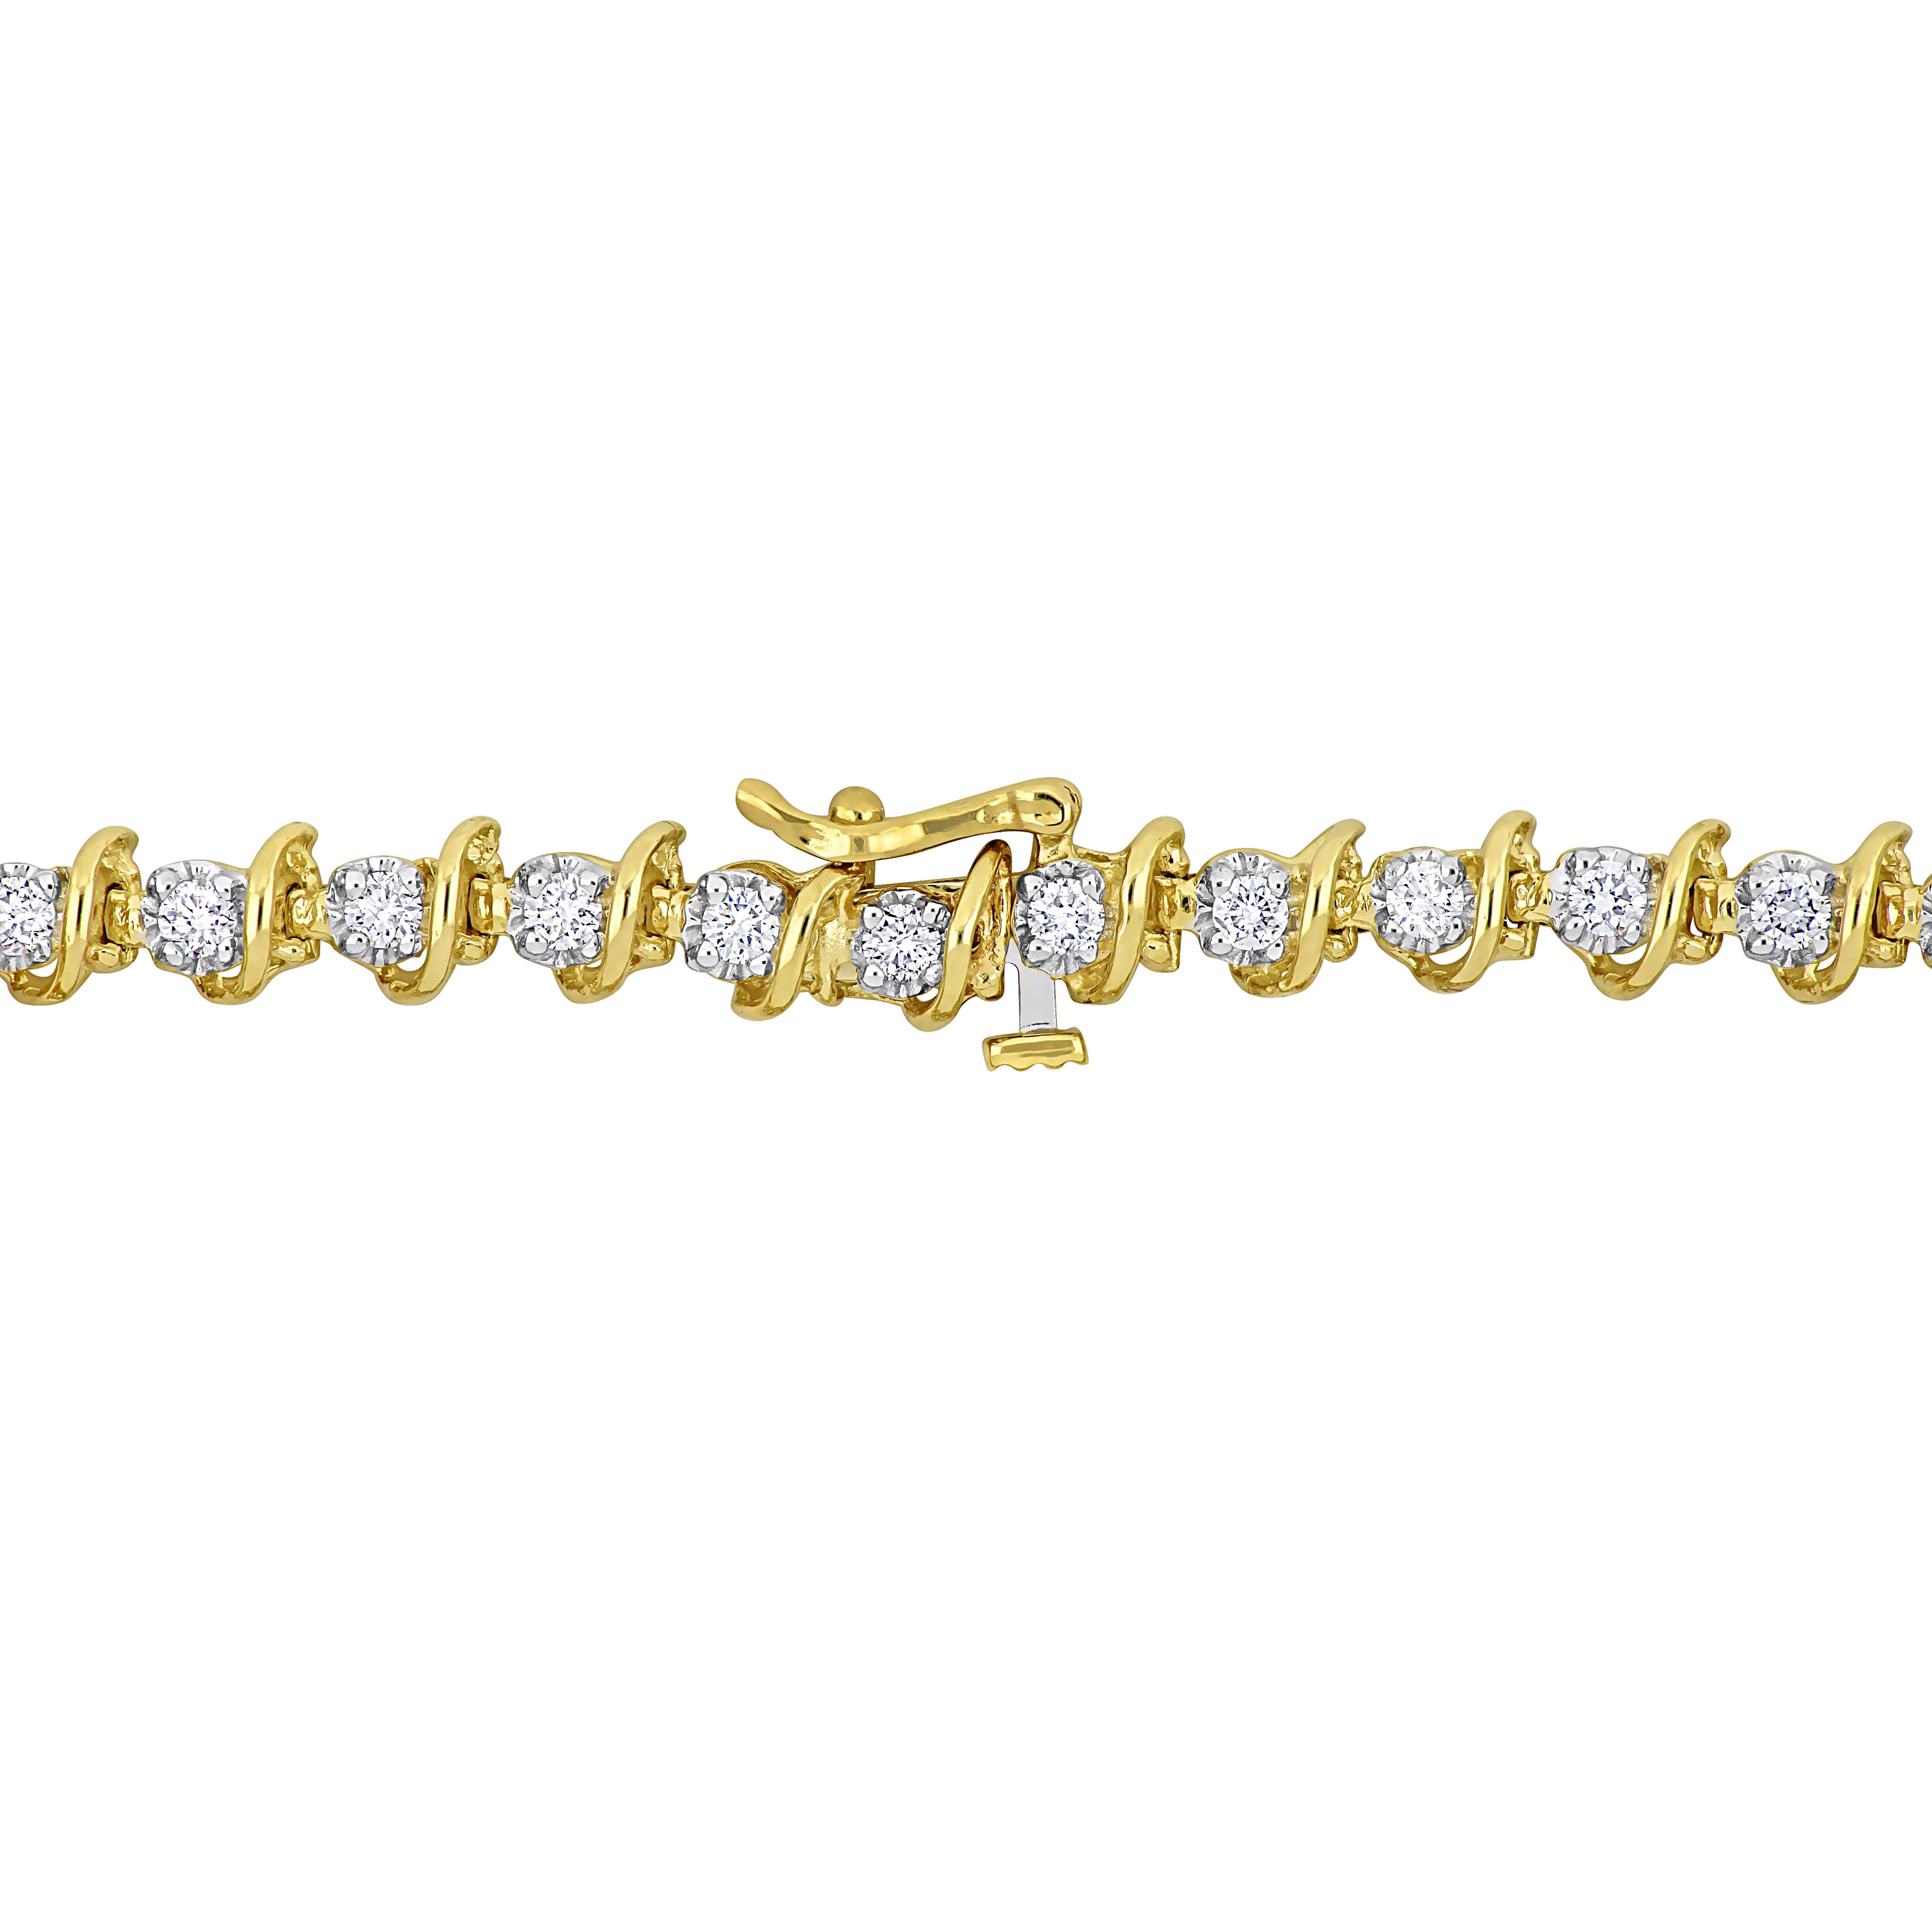 1 3/8 CT TDW Diamond S-Link Tennis Bracelet in 18k Yellow Gold - 7 in.